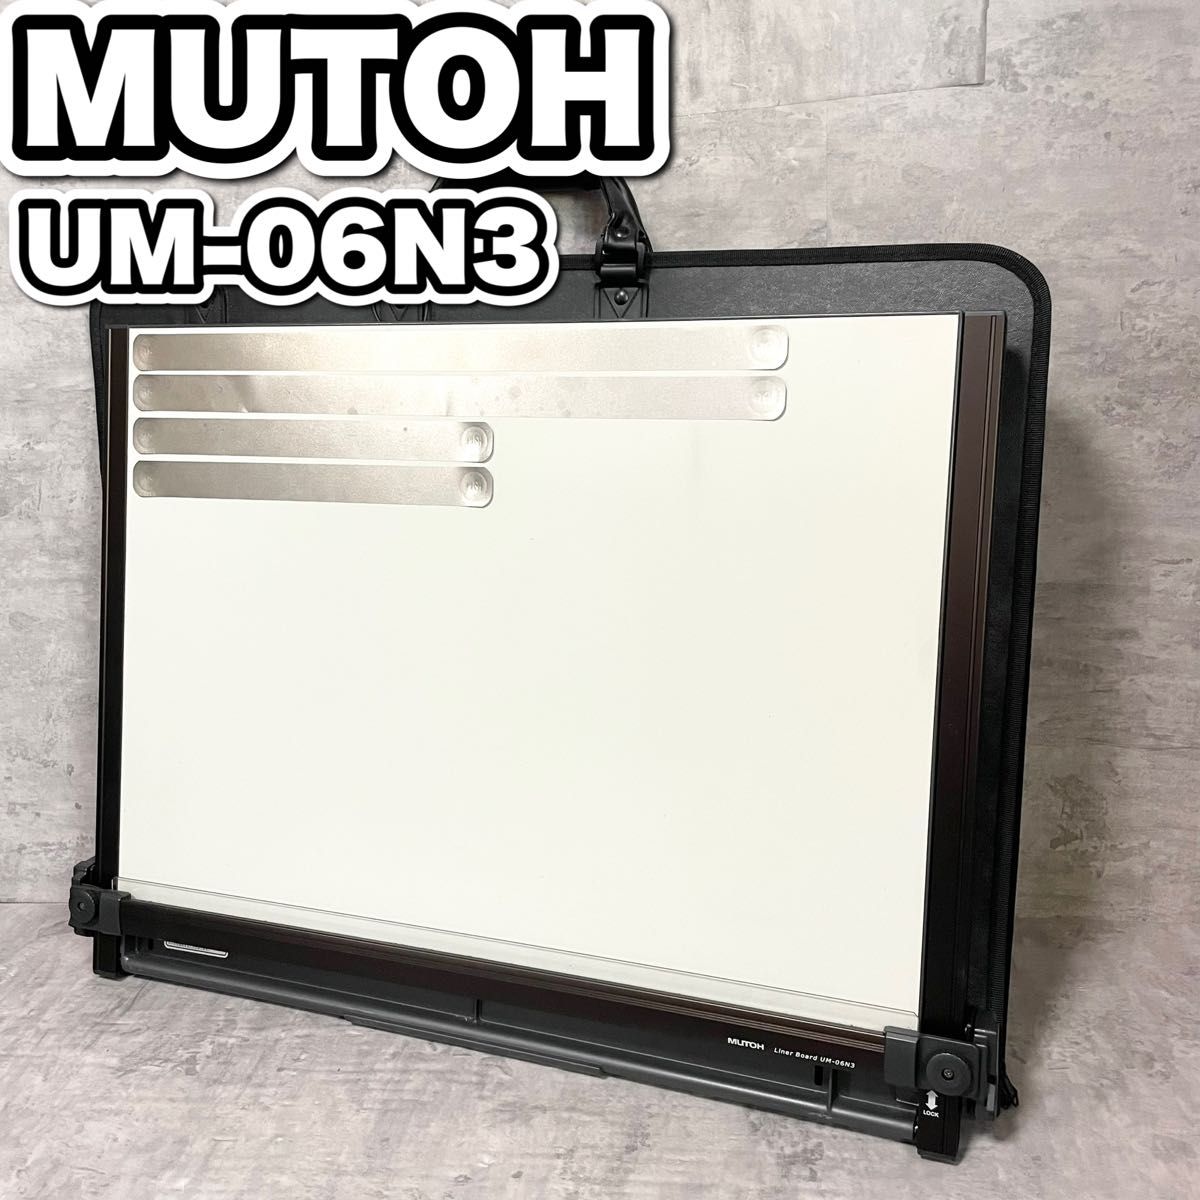 MUTOH ムトー 製図板 UM-06N3 ライナーボード 平行定規 建築士-